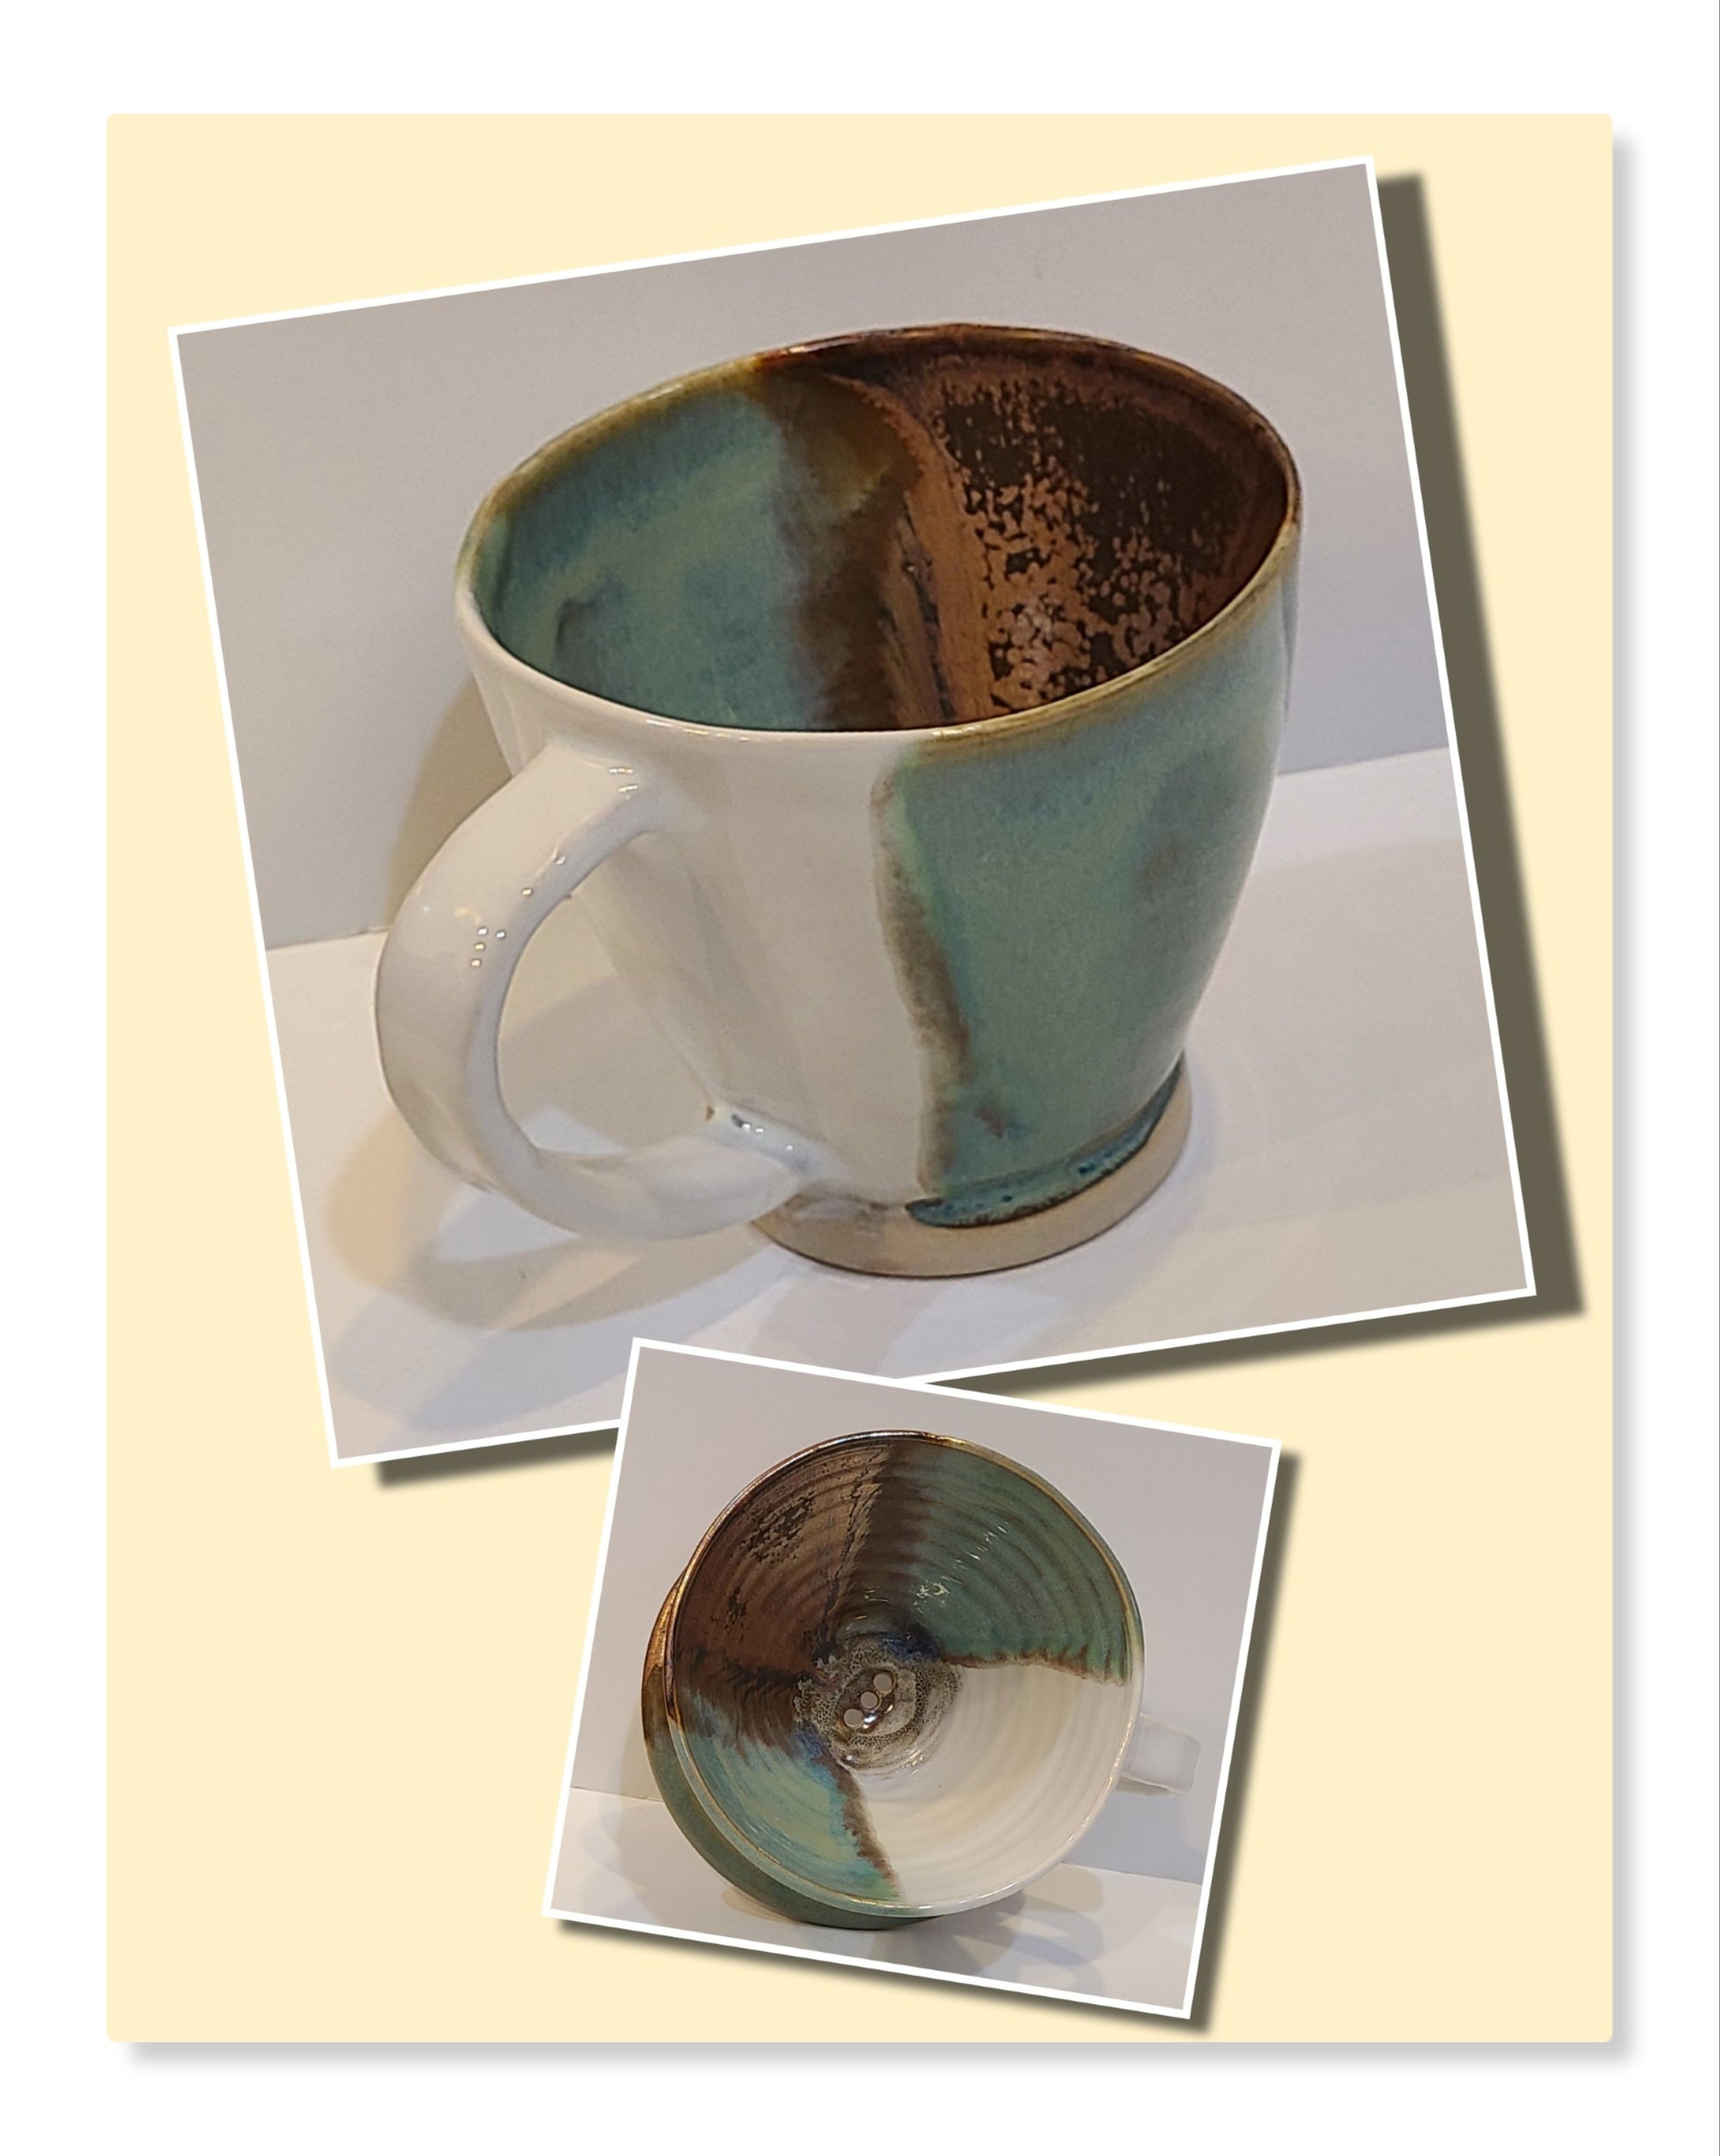 Mug - Copper Patina